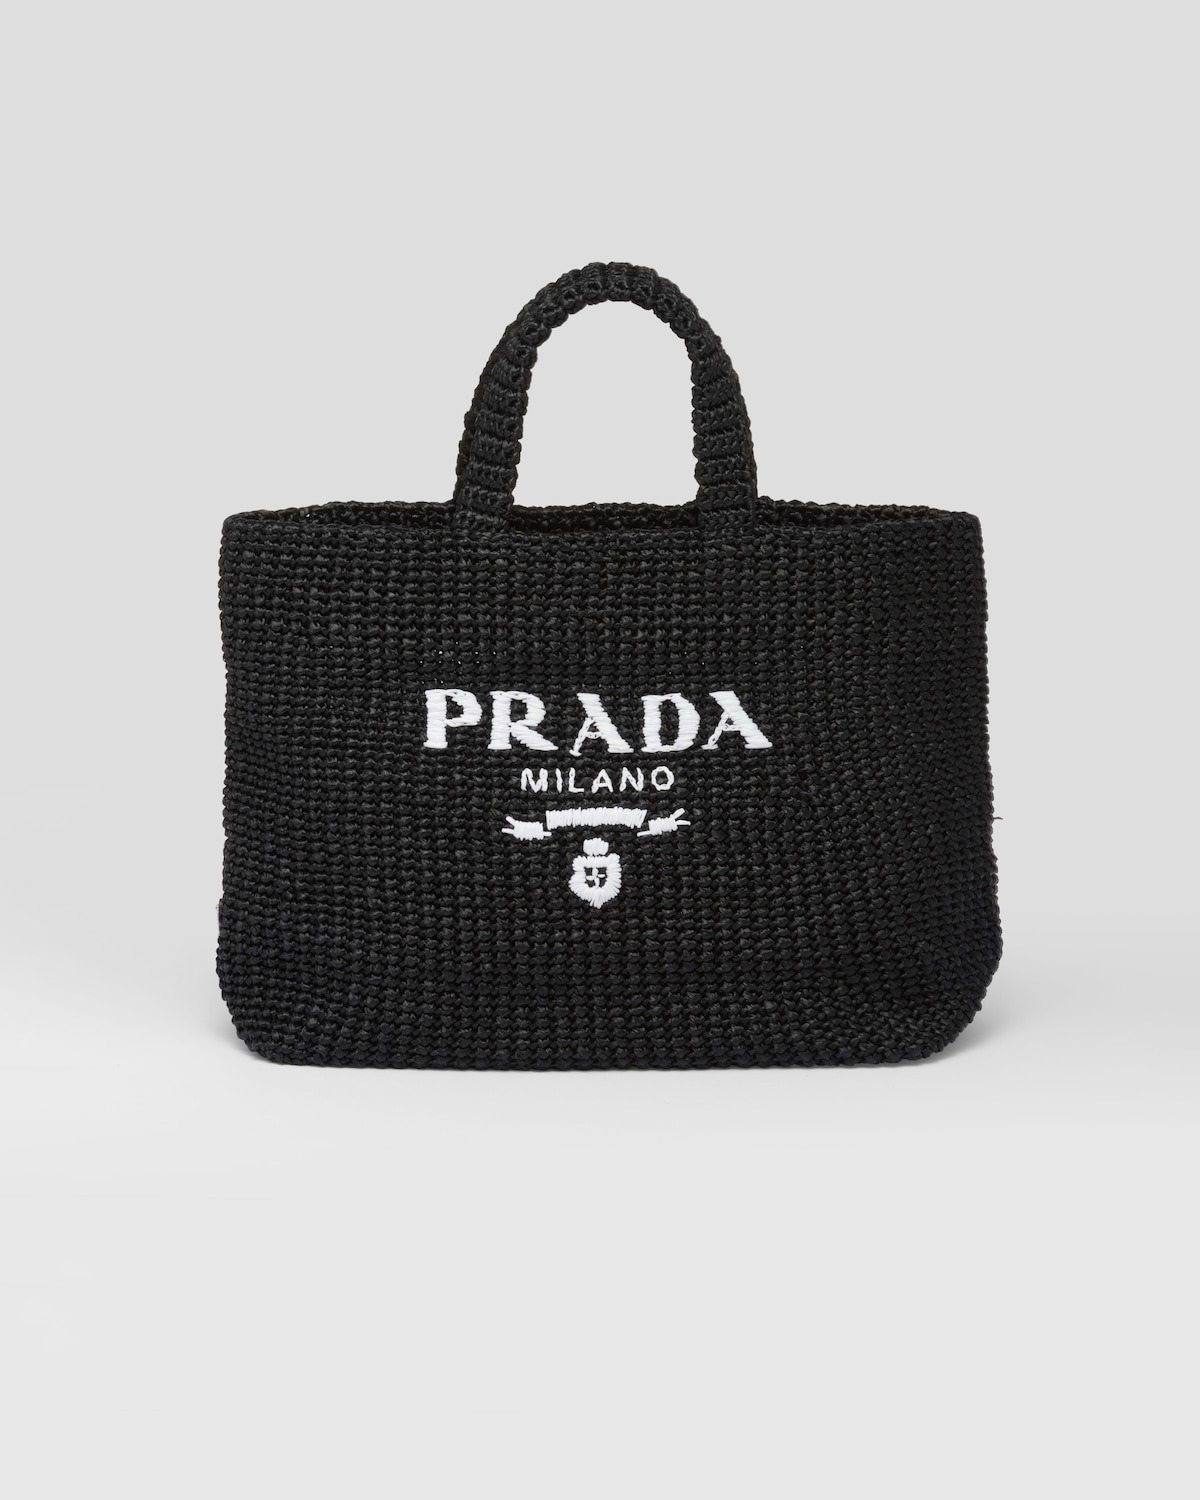 Inside Gigi Hadid's Prada Bag